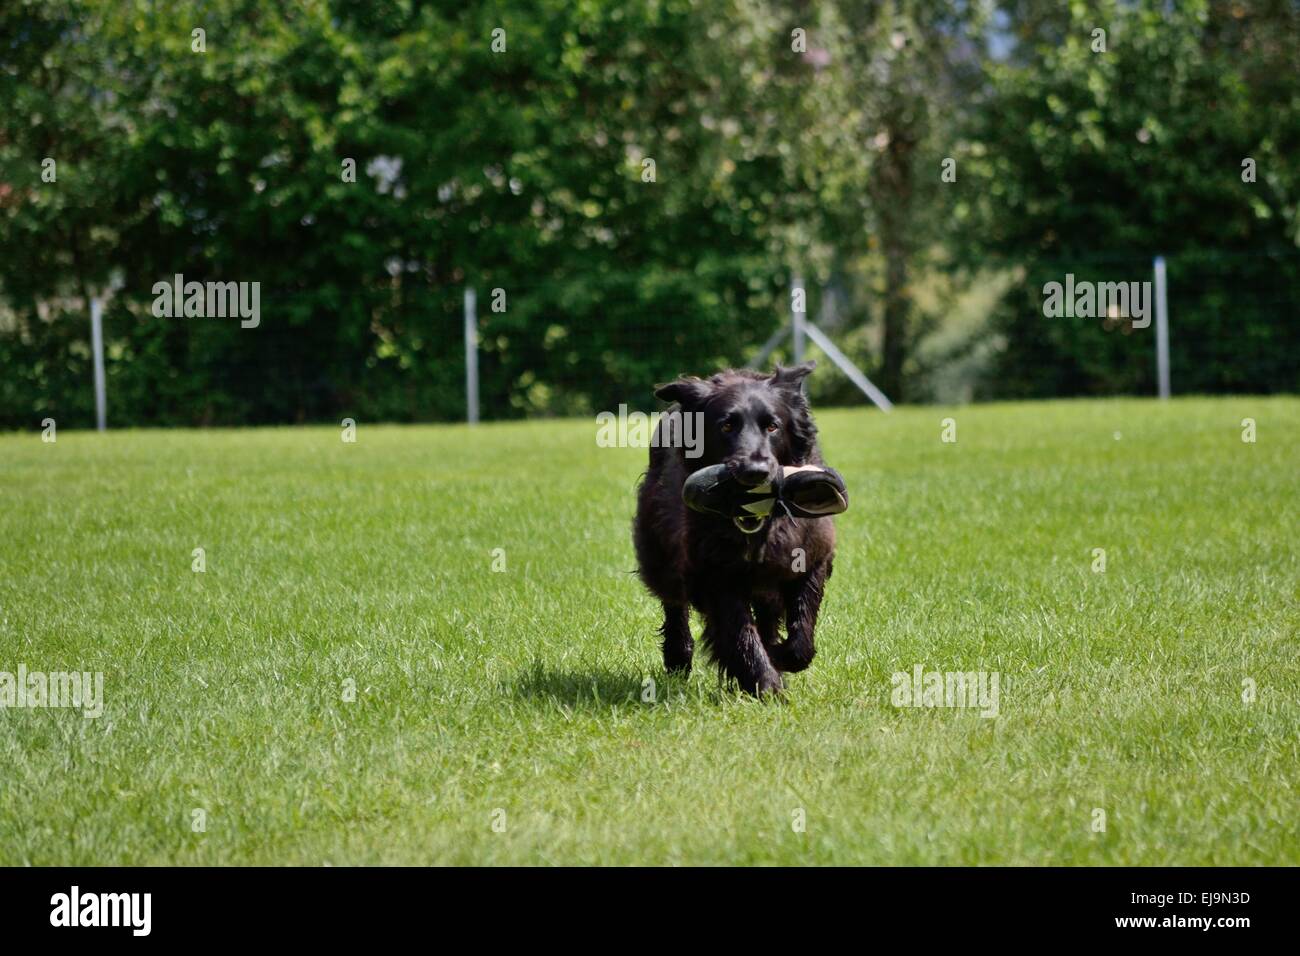 black dog brings Sneakers Stock Photo